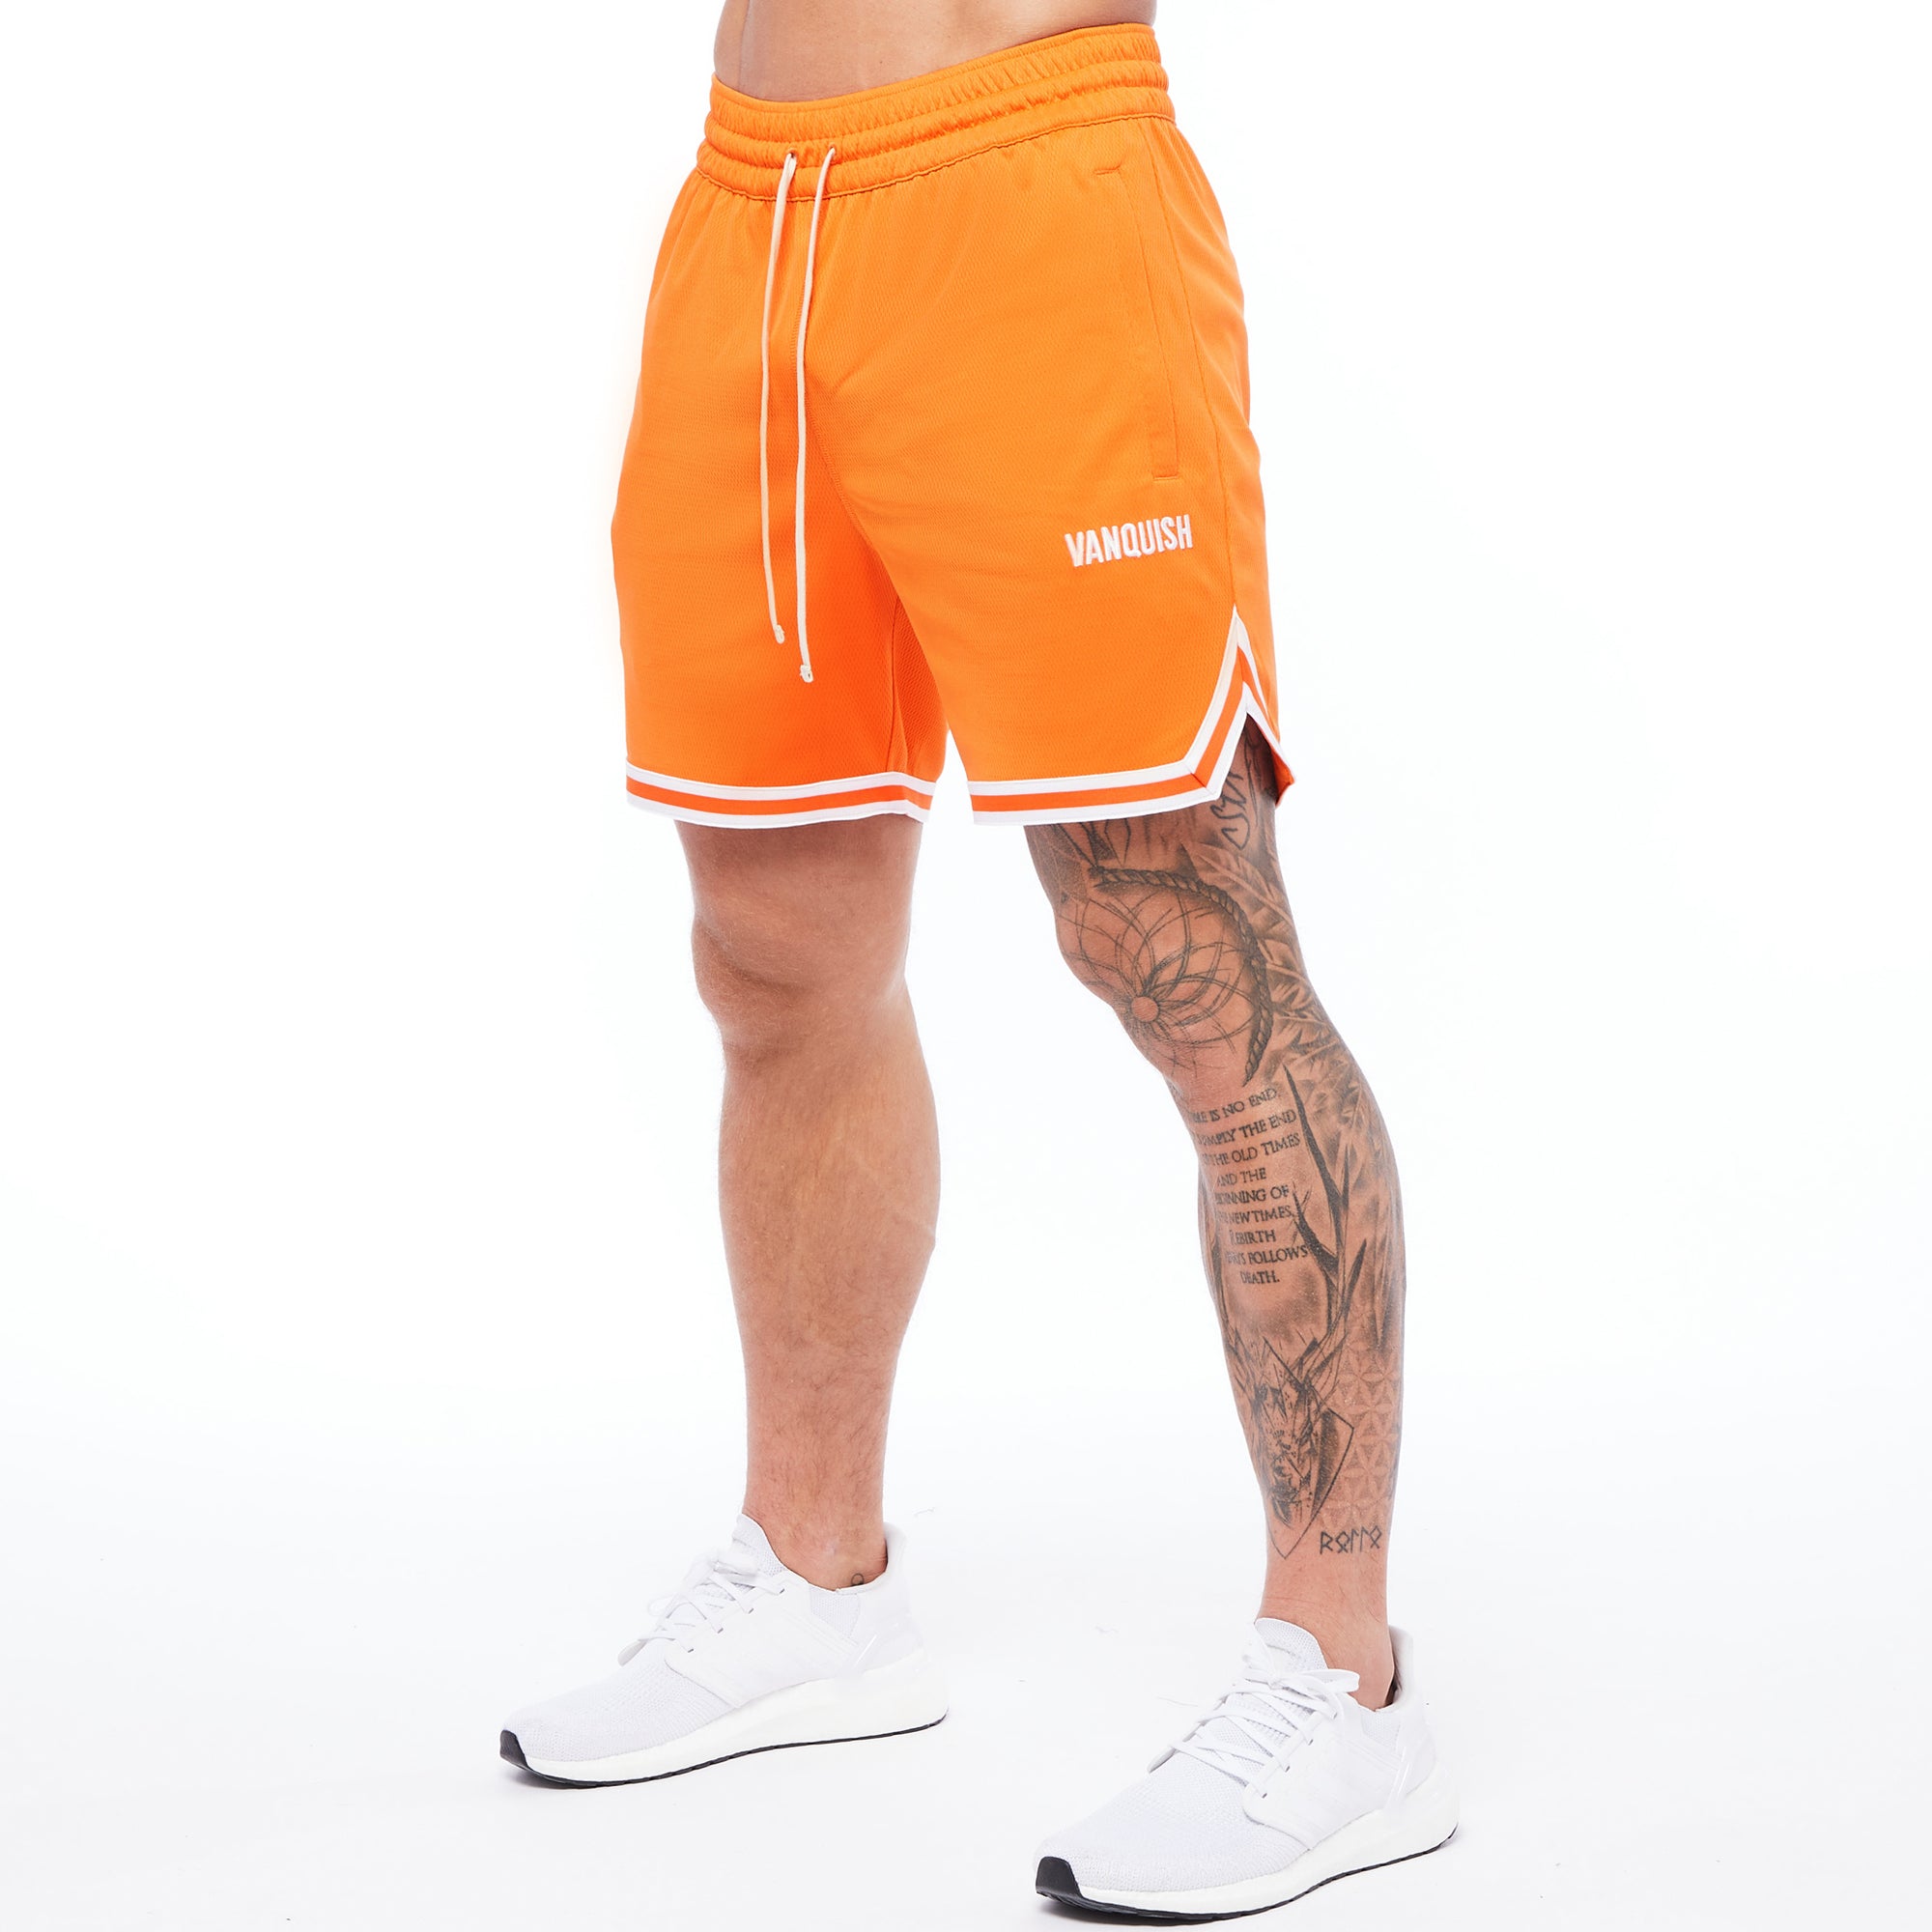 Vanquish Throwback Orange Shorts